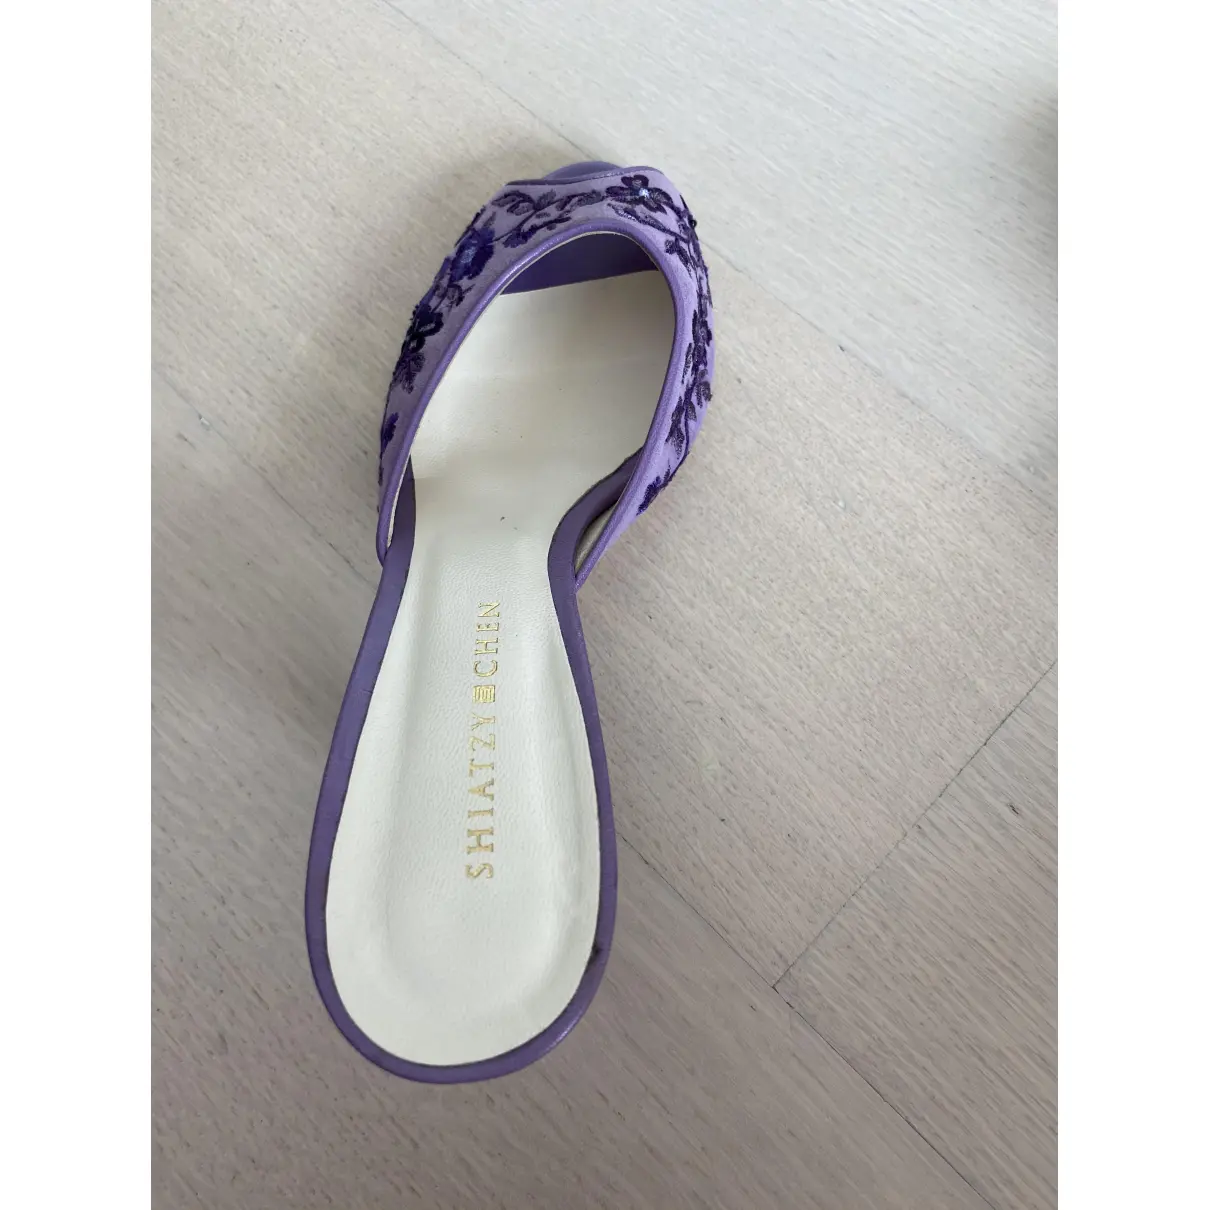 Luxury Shiatzy Chen Sandals Women